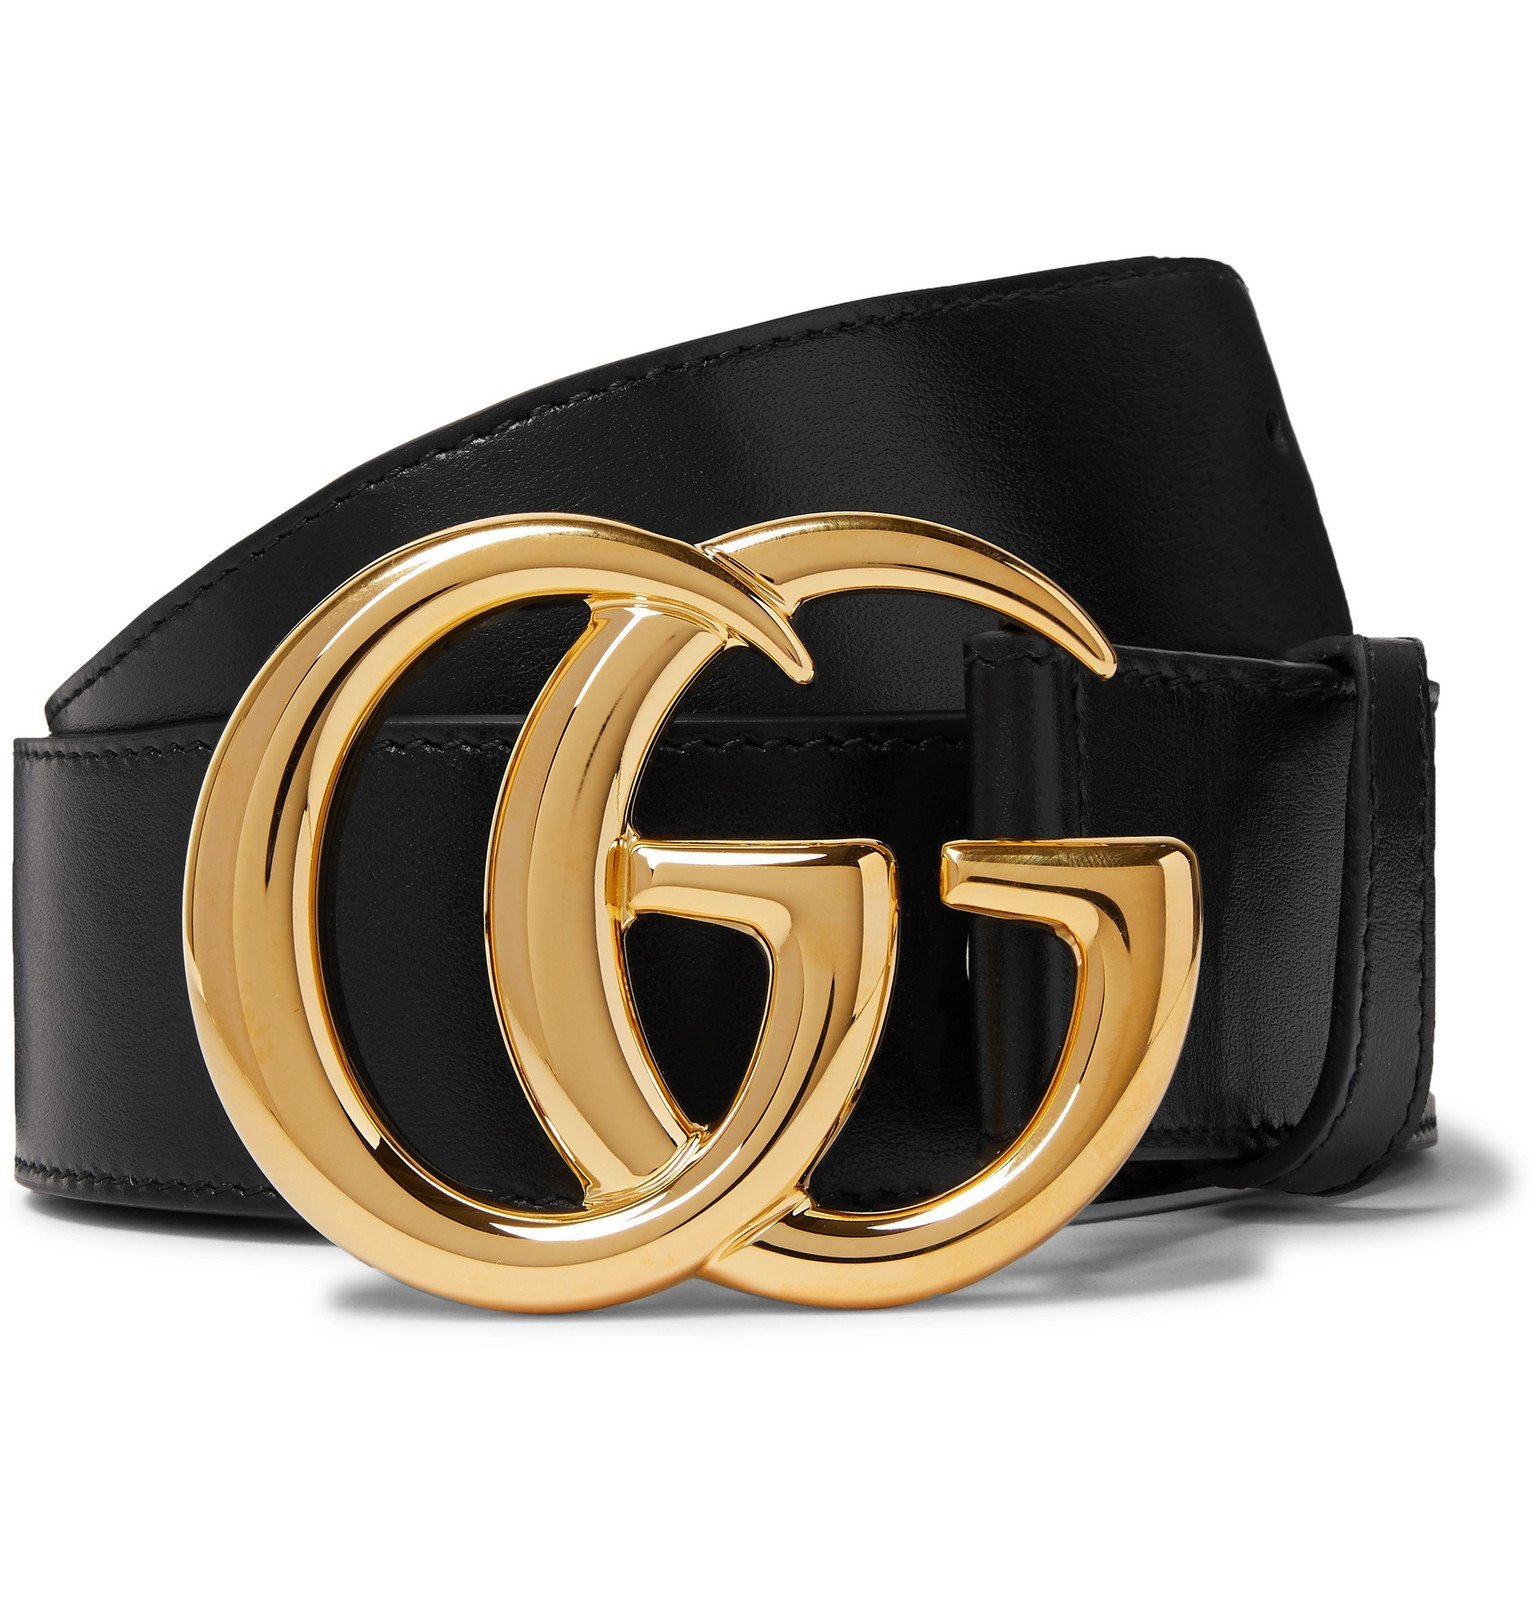 Gucci - 4cm Black Leather Belt - Black 